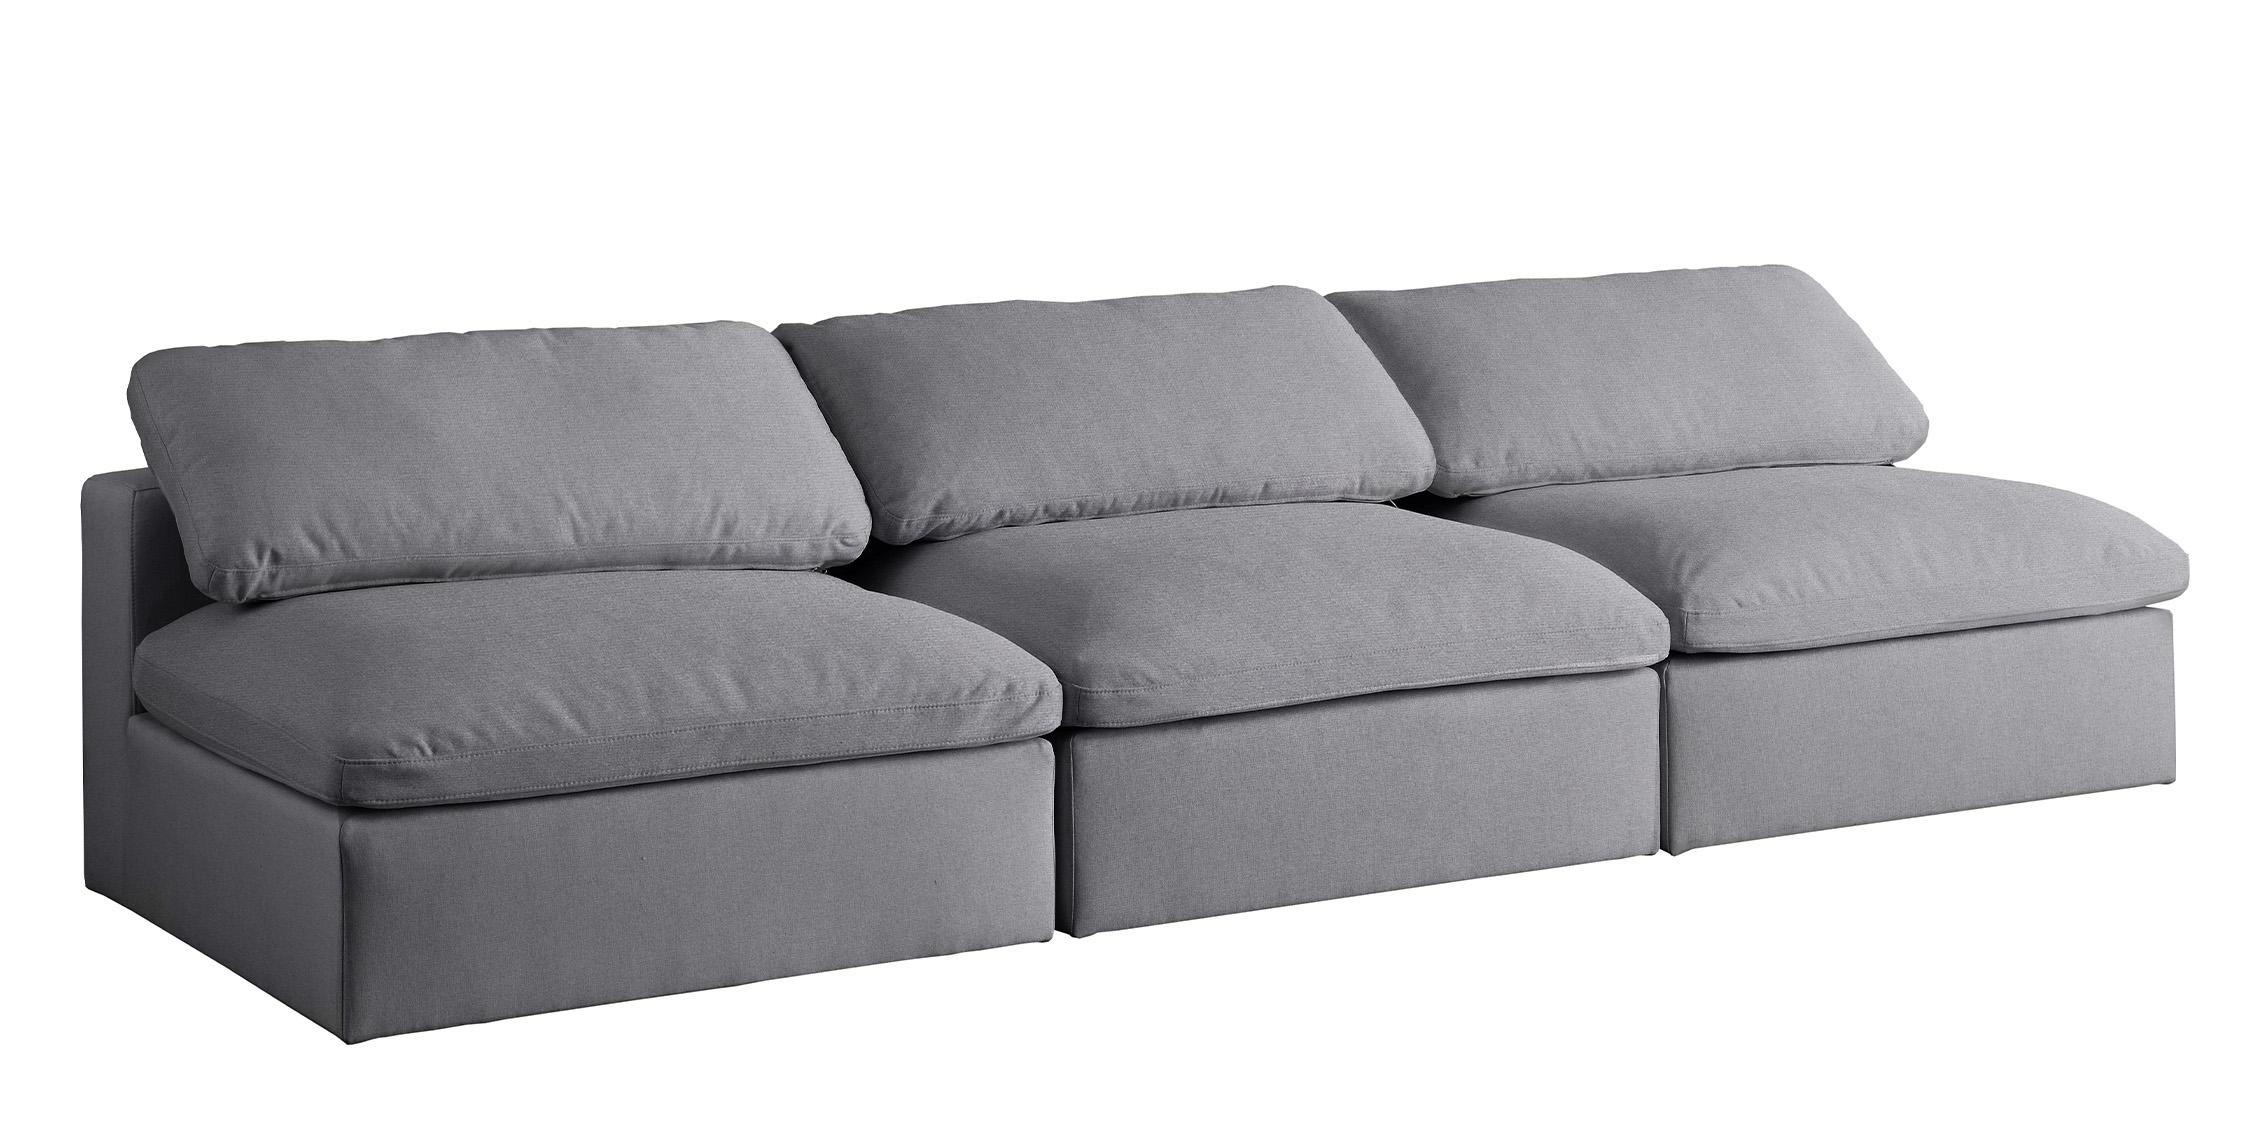 

    
Serene Grey Linen Textured Fabric Deluxe Comfort Modular Armless Sofa S117 Meridian
